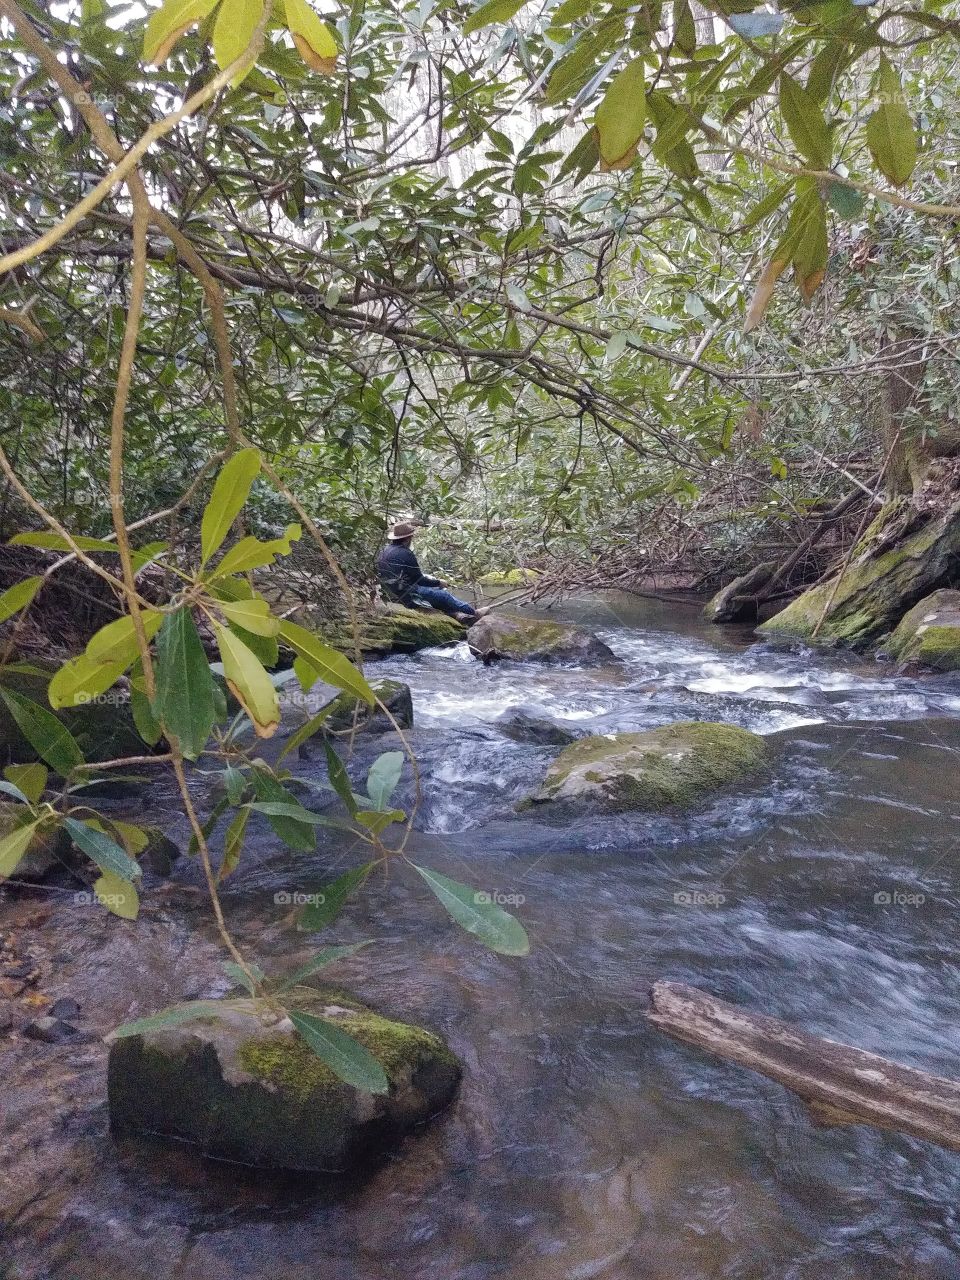 tranquil, cool, river, fishing, wildcat creek, Mountain Laurel, peaceful, moss, rocks